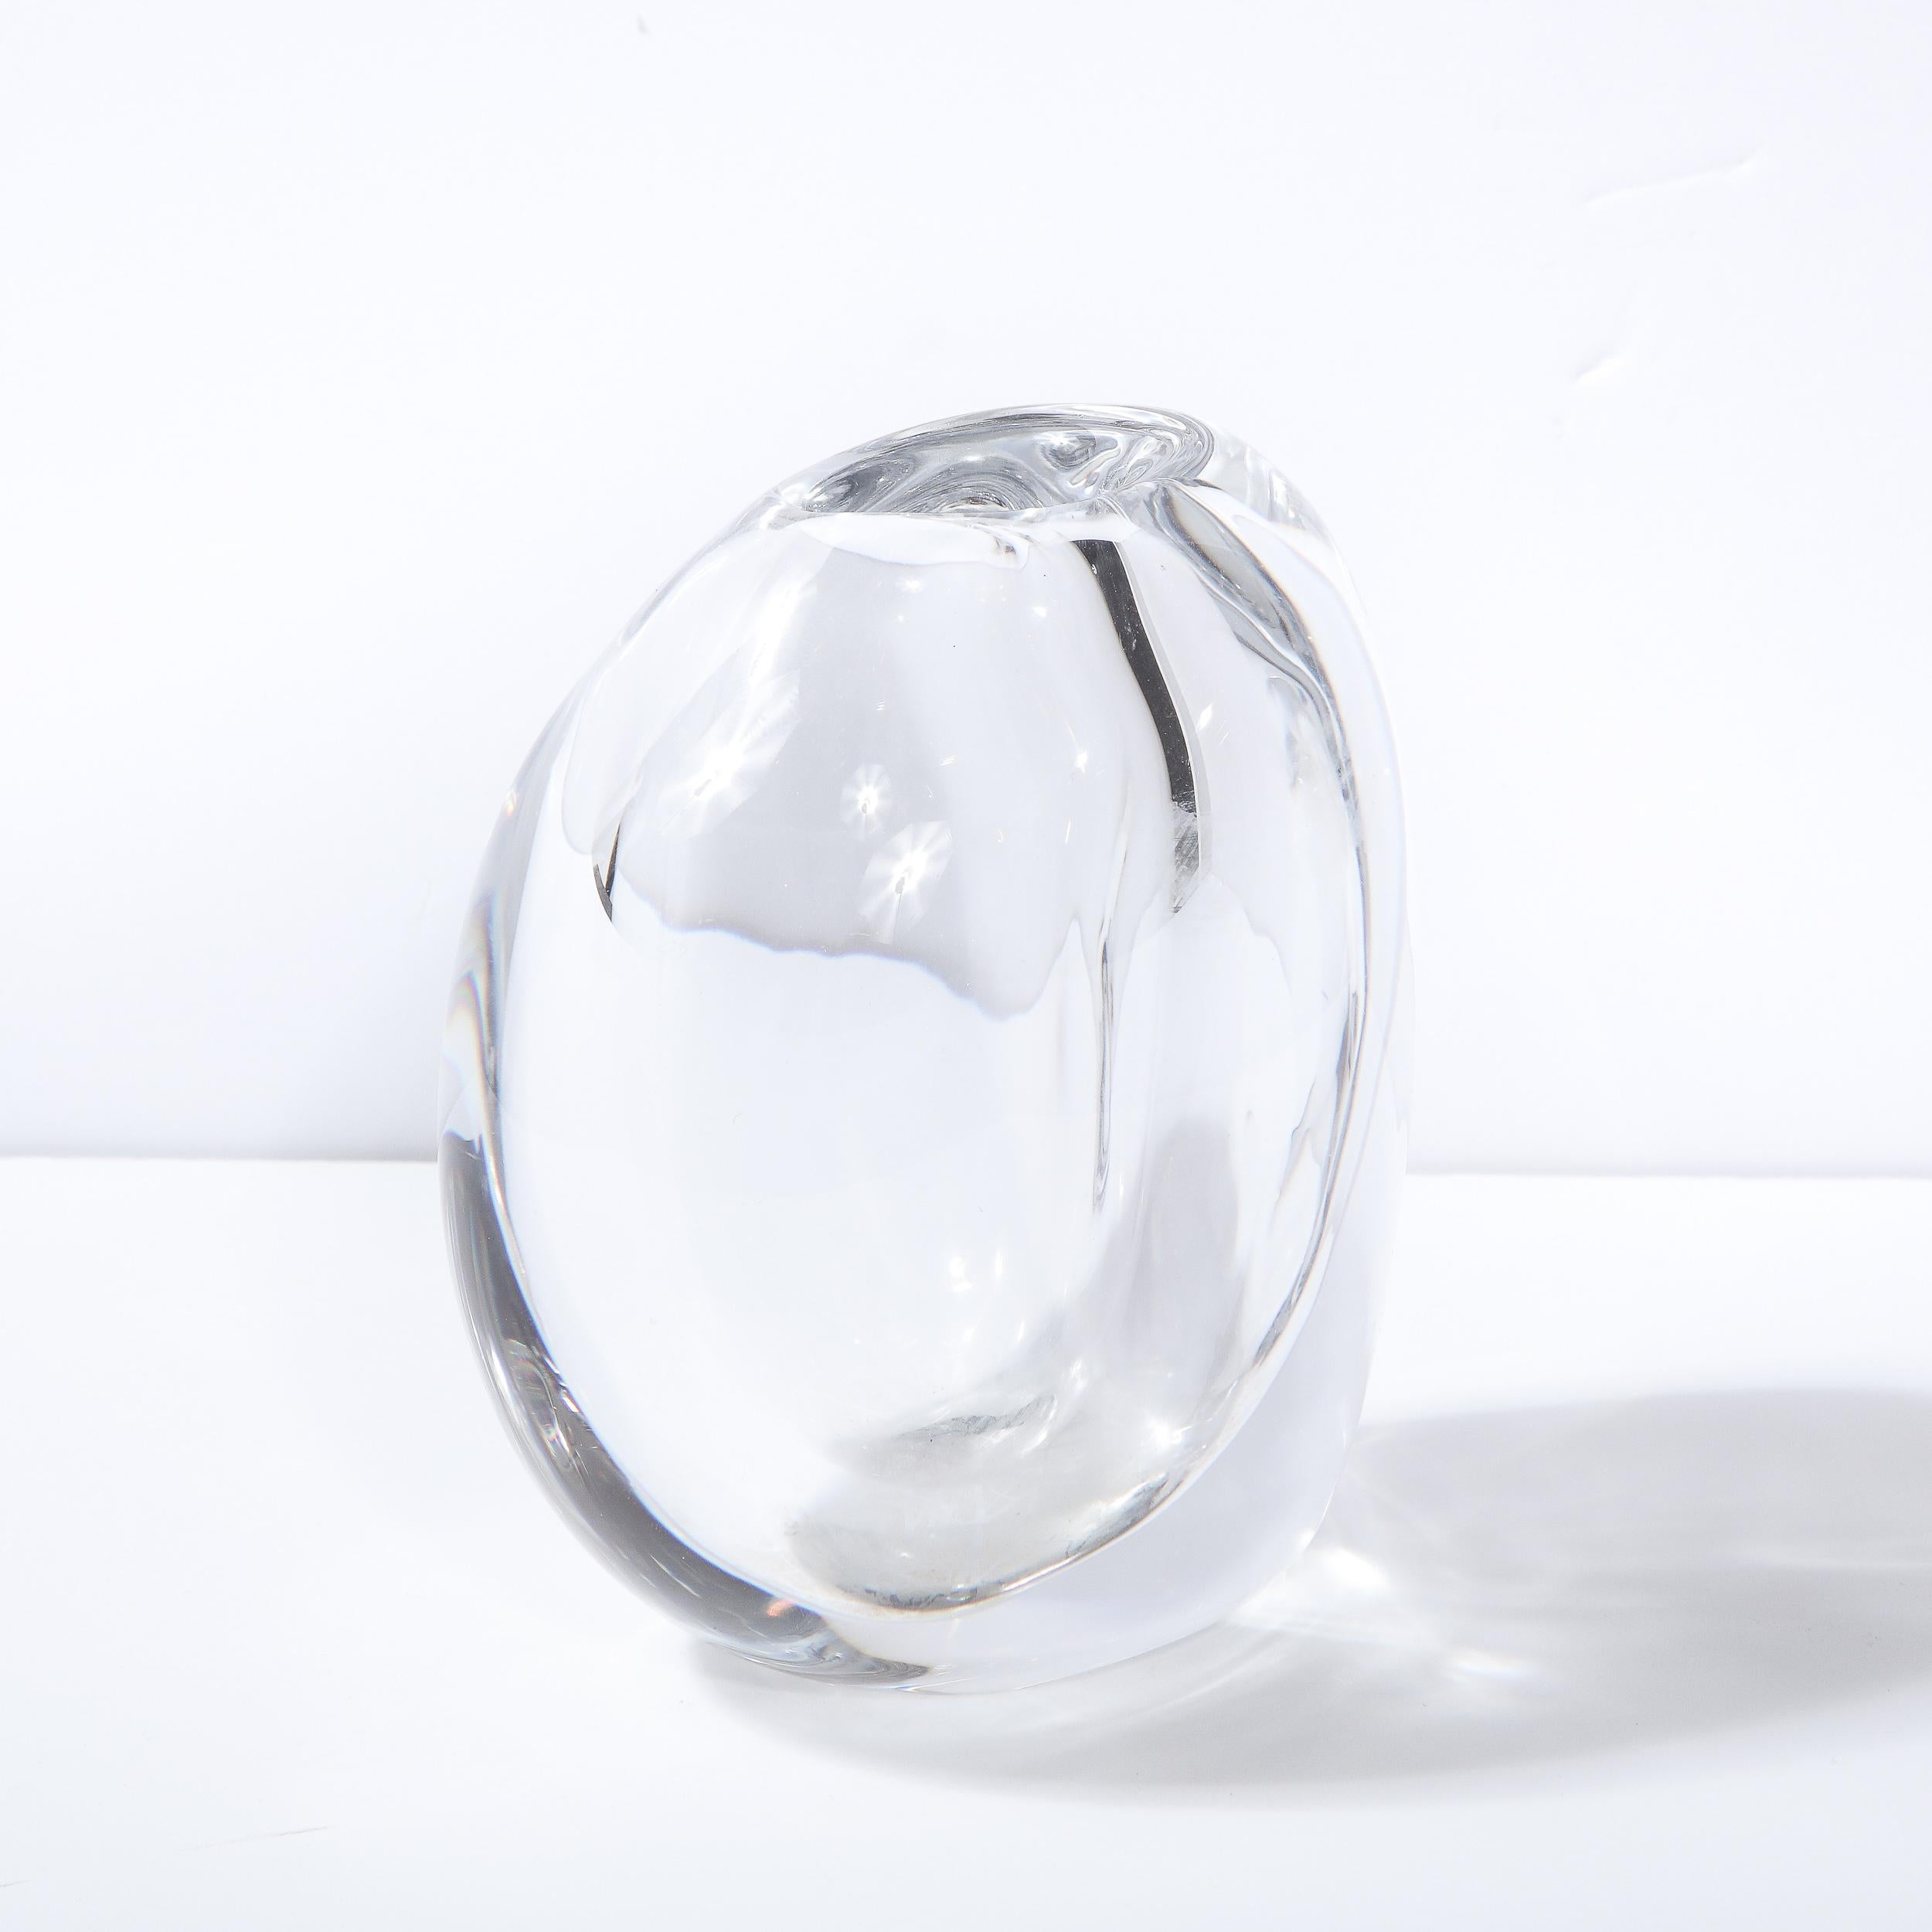 Swedish Mid-Century Modern Translucent Glass Vase by Göran Wärff for Kosta Boda For Sale 1